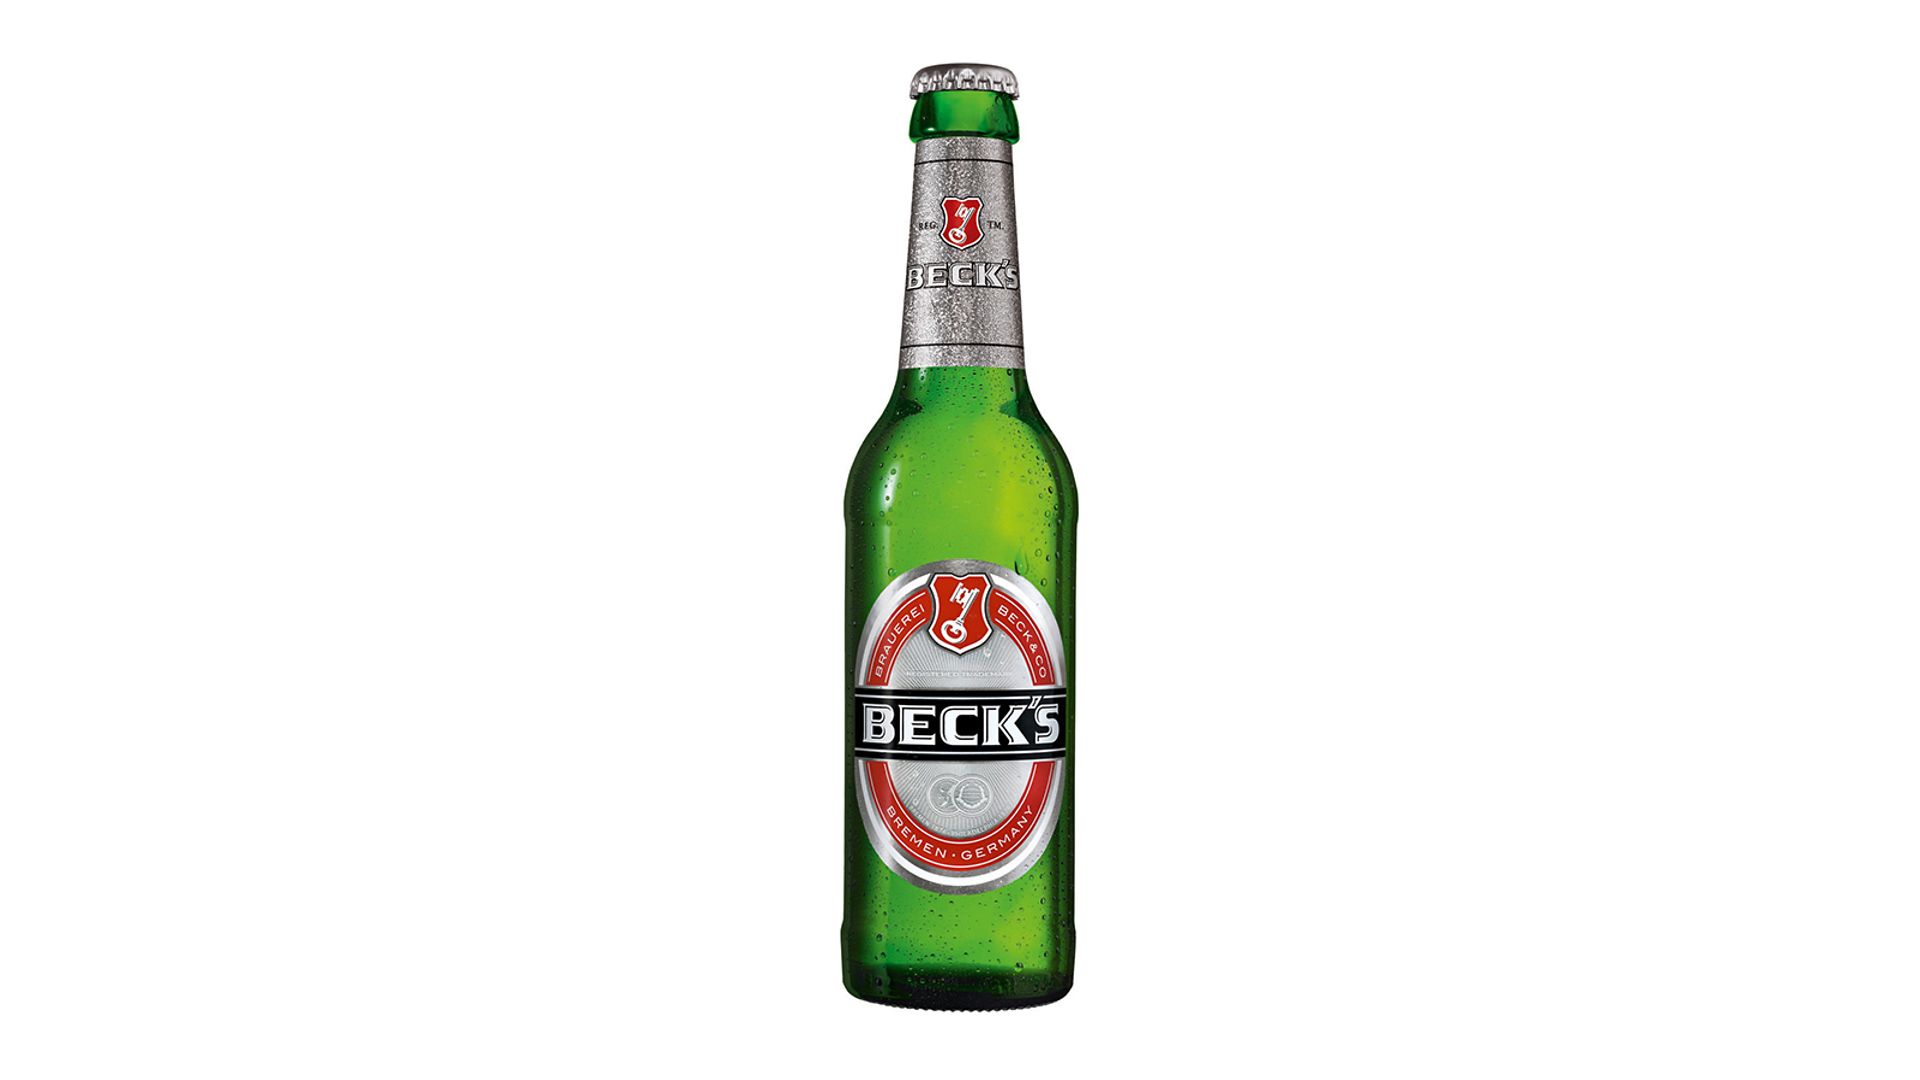 Beck’s brand beer bottles